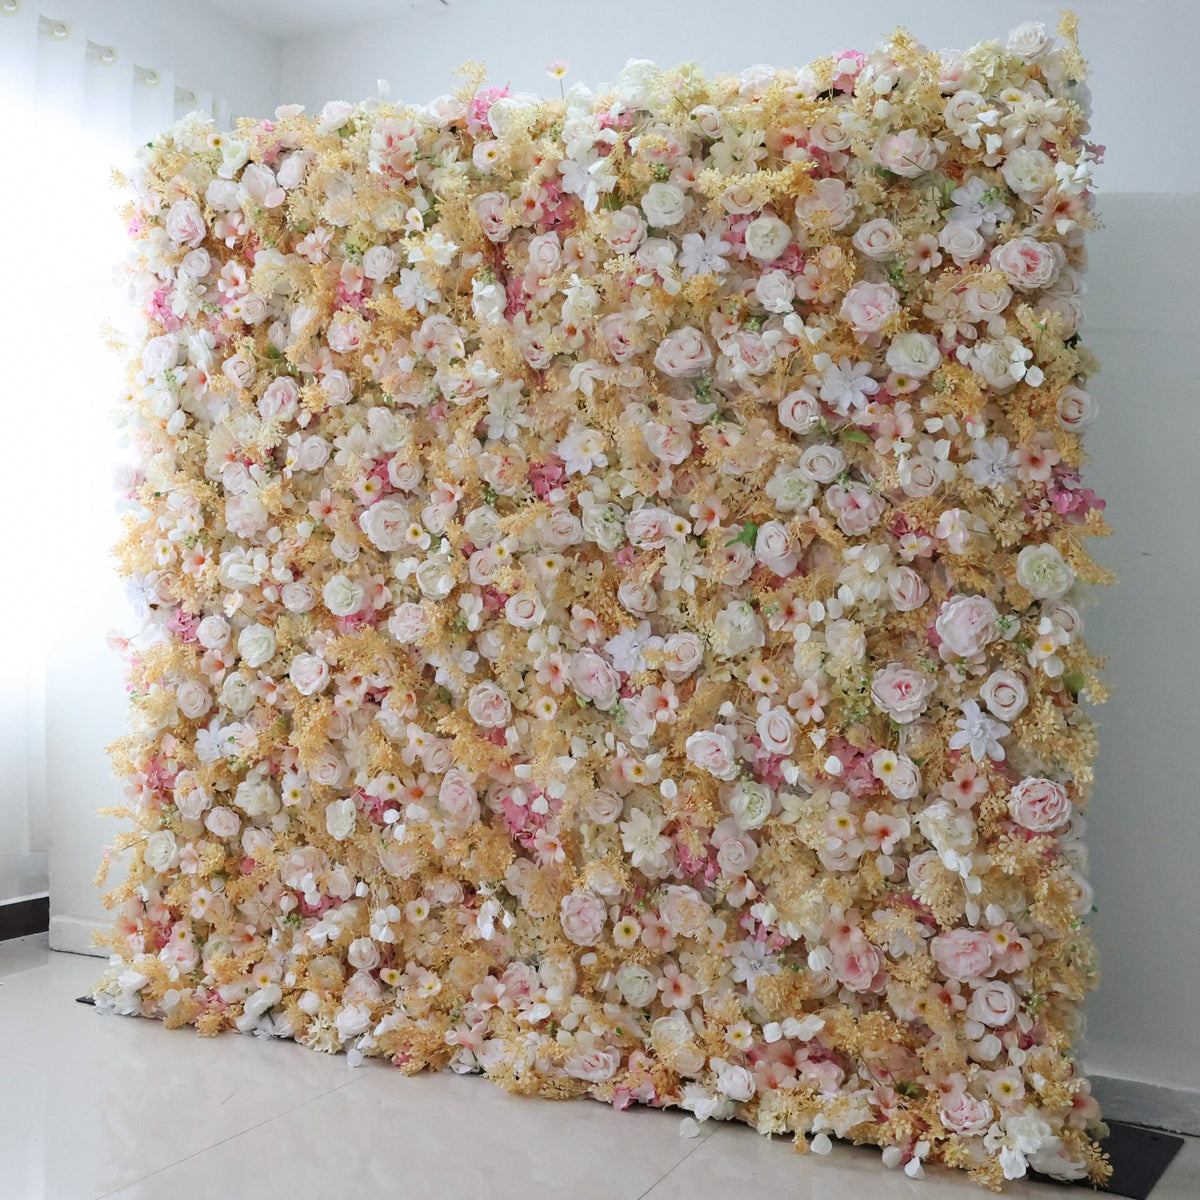 3D Artificial Flower Wall Arrangement Wedding Party Birthday Backdrop Decor HQ1331